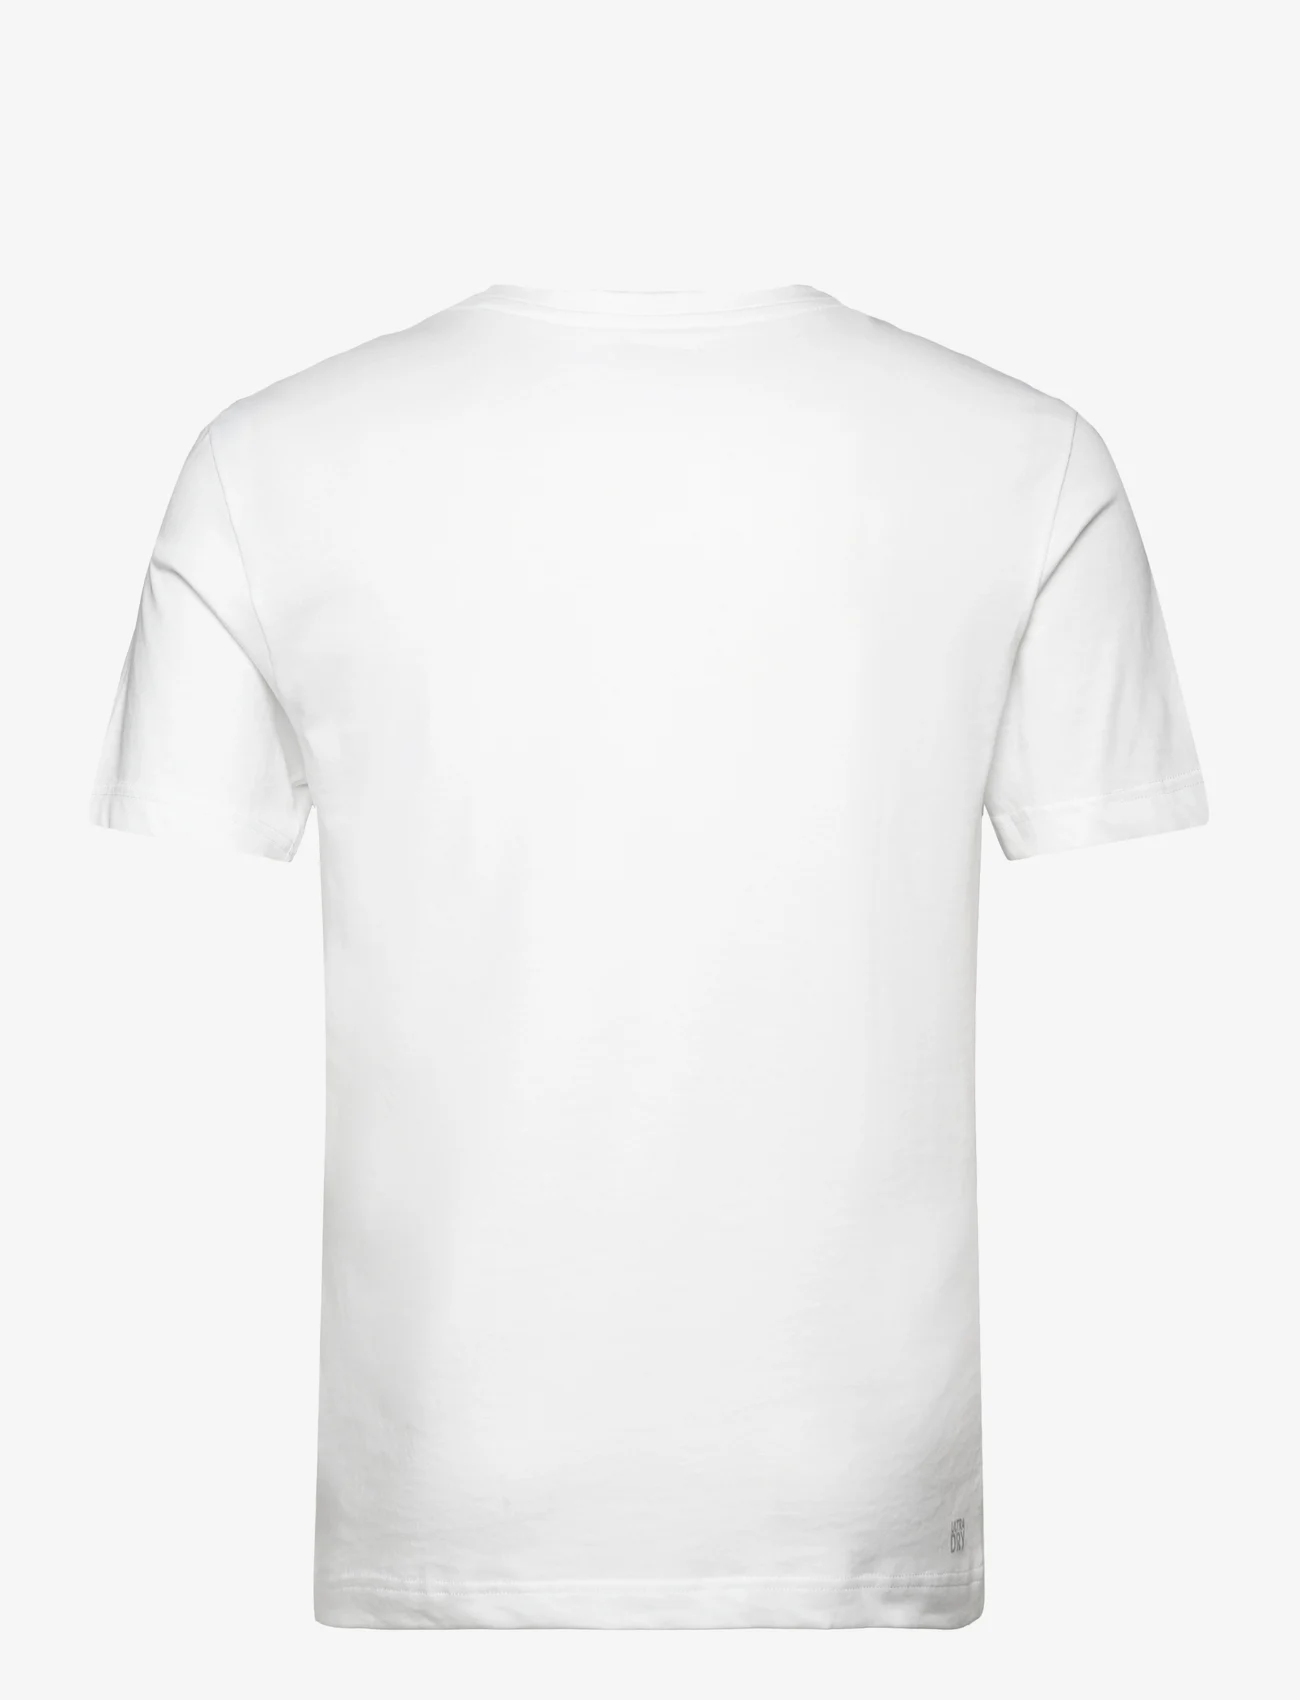 Lacoste - TEE-SHIRT&TURTLE NECK - short-sleeved t-shirts - white/black - 1